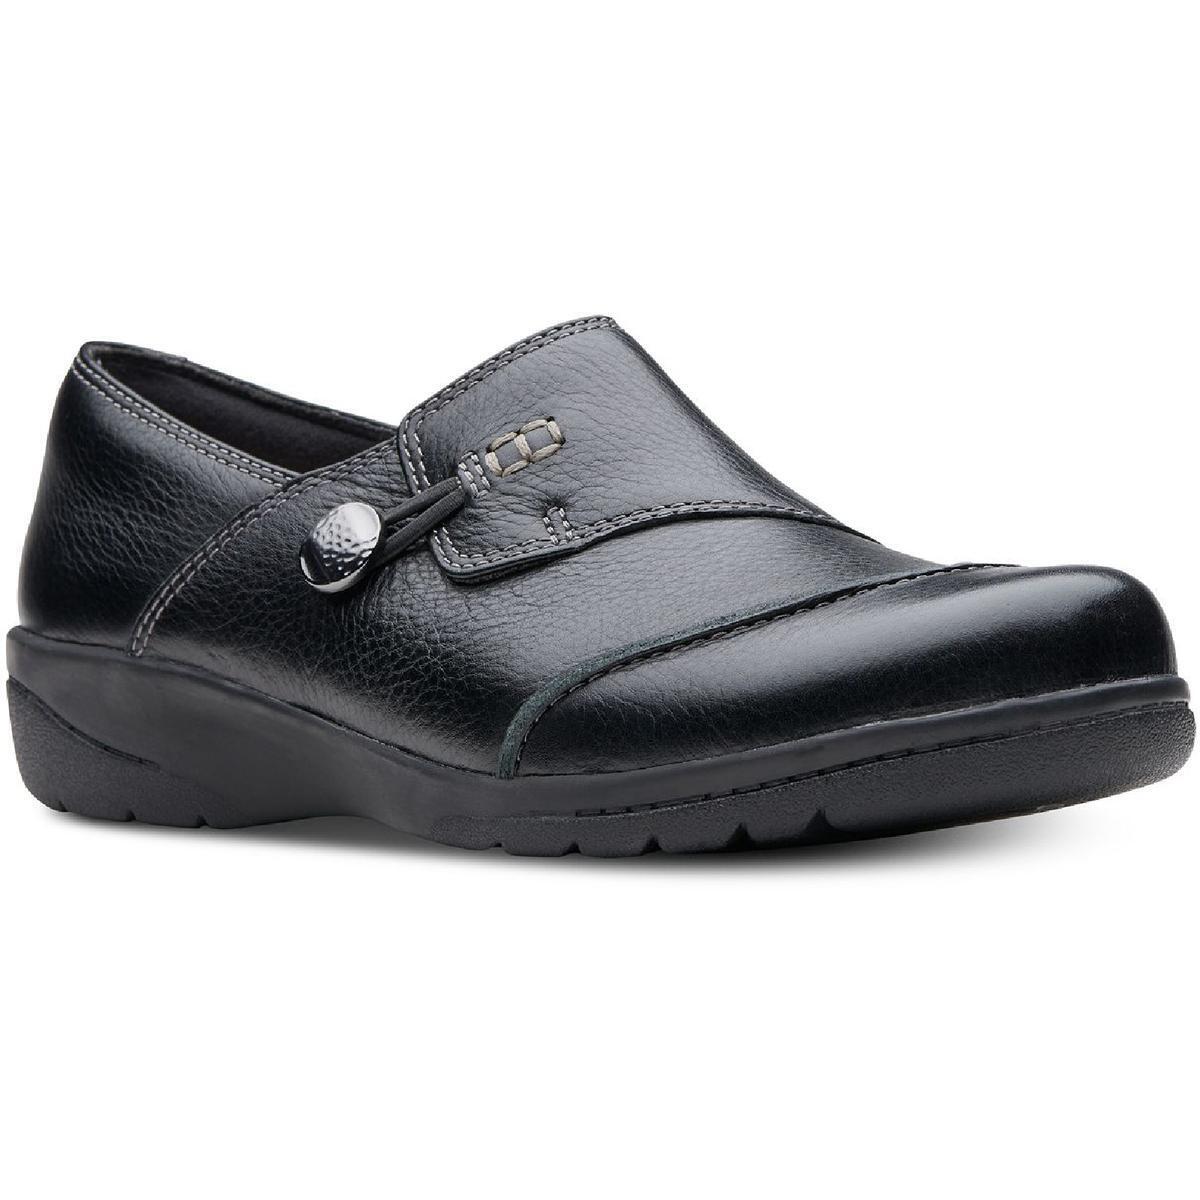 Black Leather Slip-On Clogs